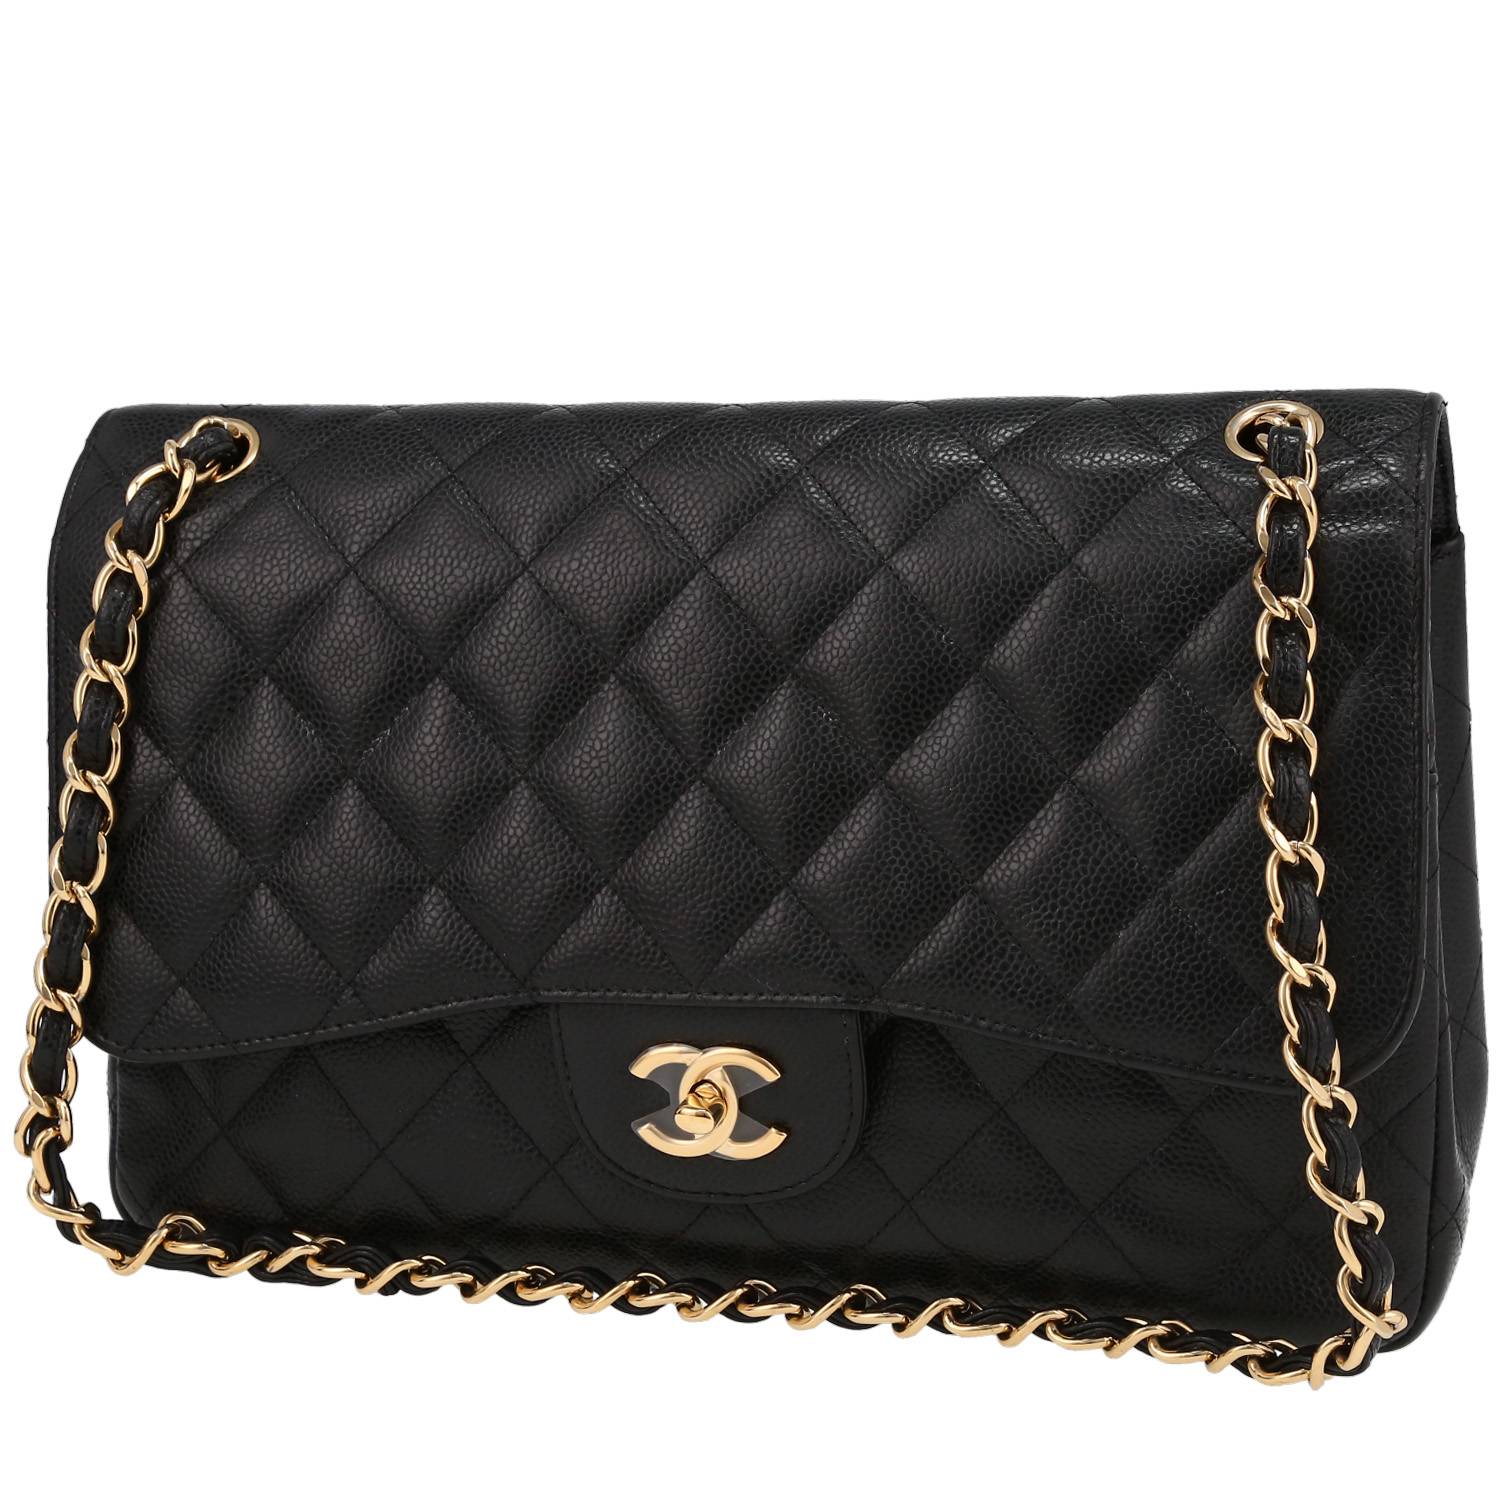 Chanel Caviar CC Large Shoulder Bag Black